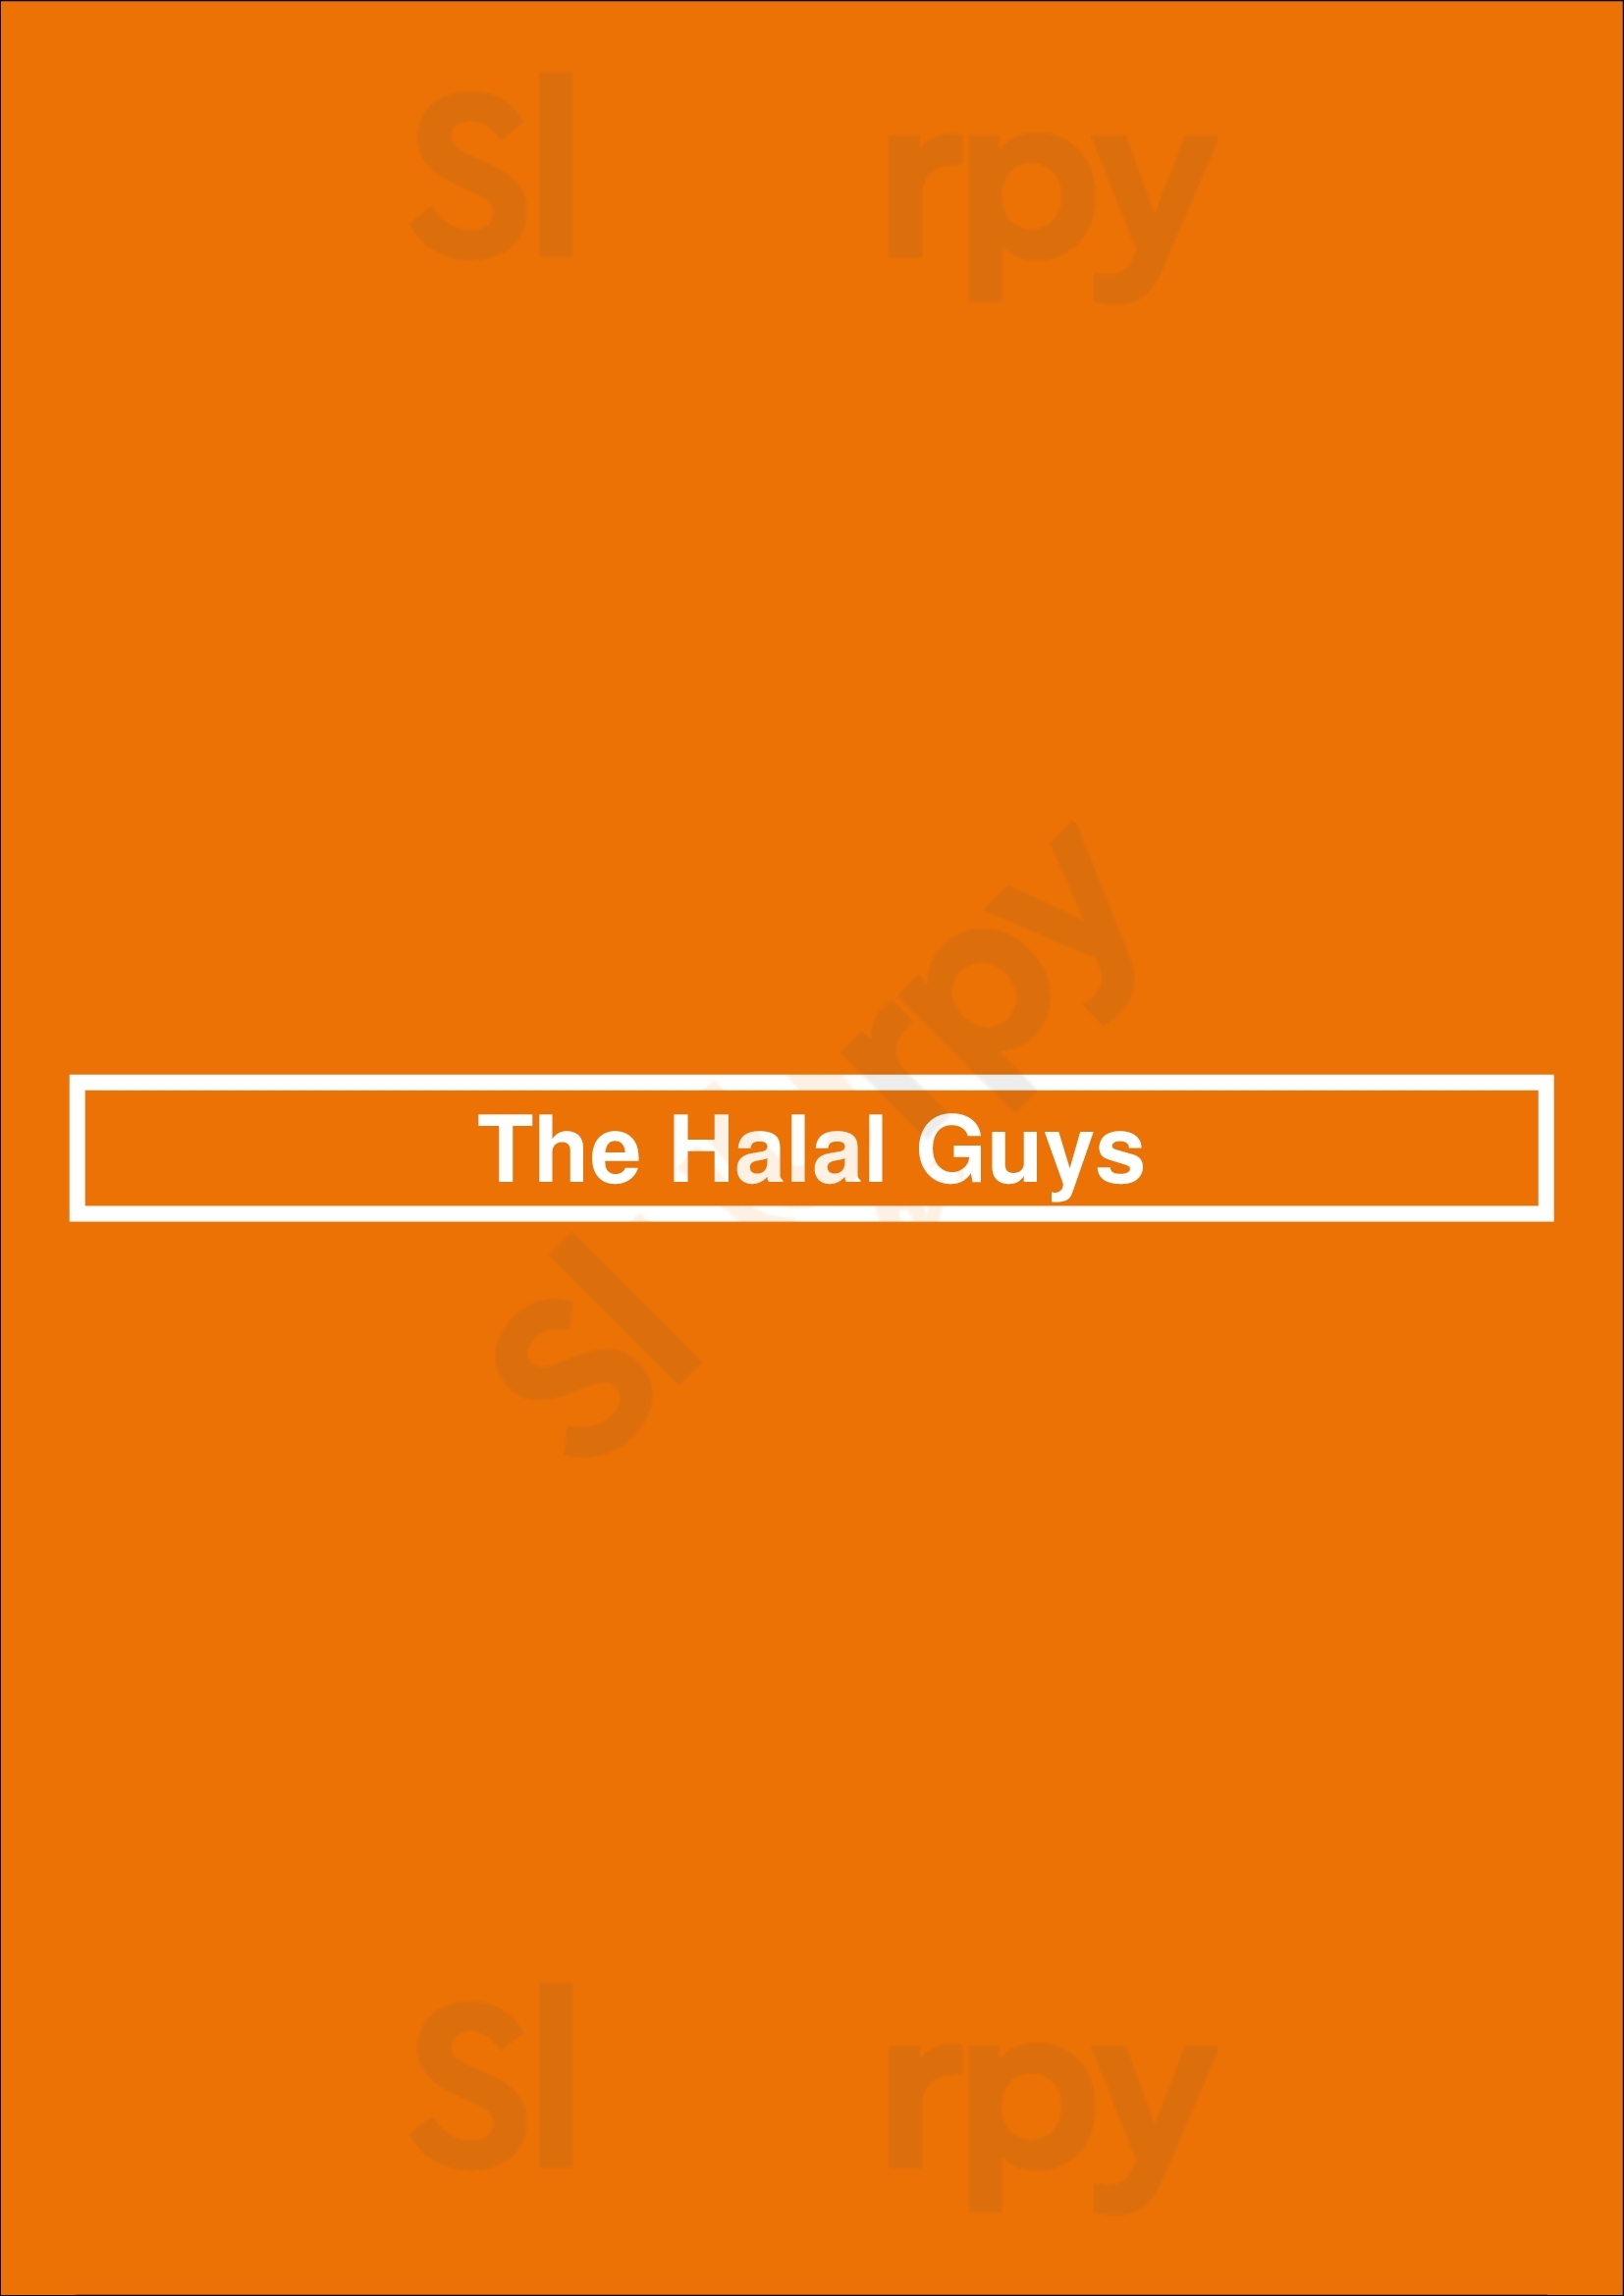 The Halal Guys Mississauga Menu - 1